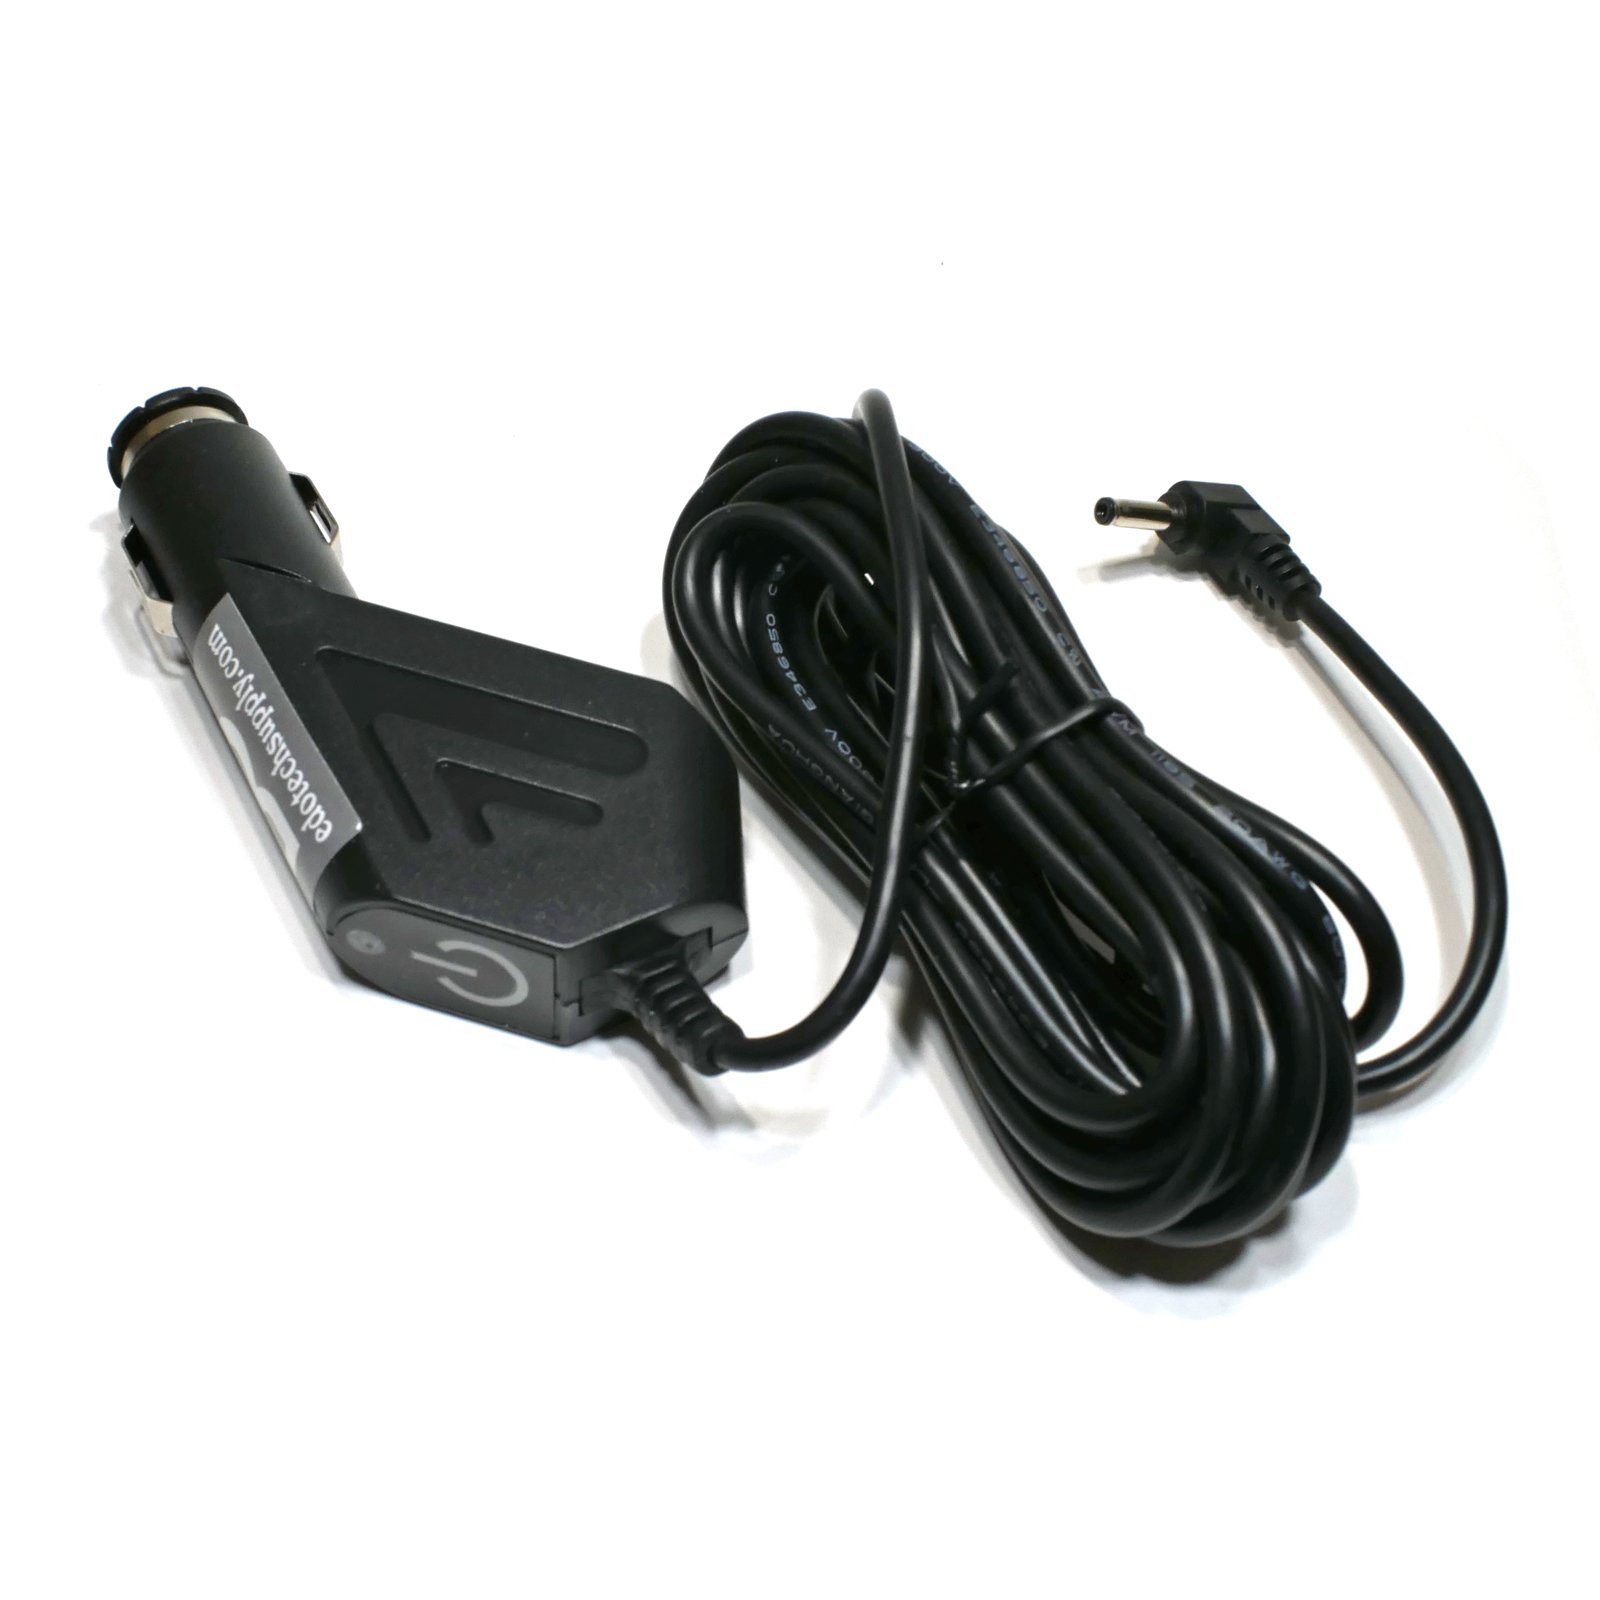 EDO Tech 10 ft Car Charger Power Cable Cord for Cobra CDR 840 Drive & SECURITYMAN Carcam-SD HD DashCam DVR